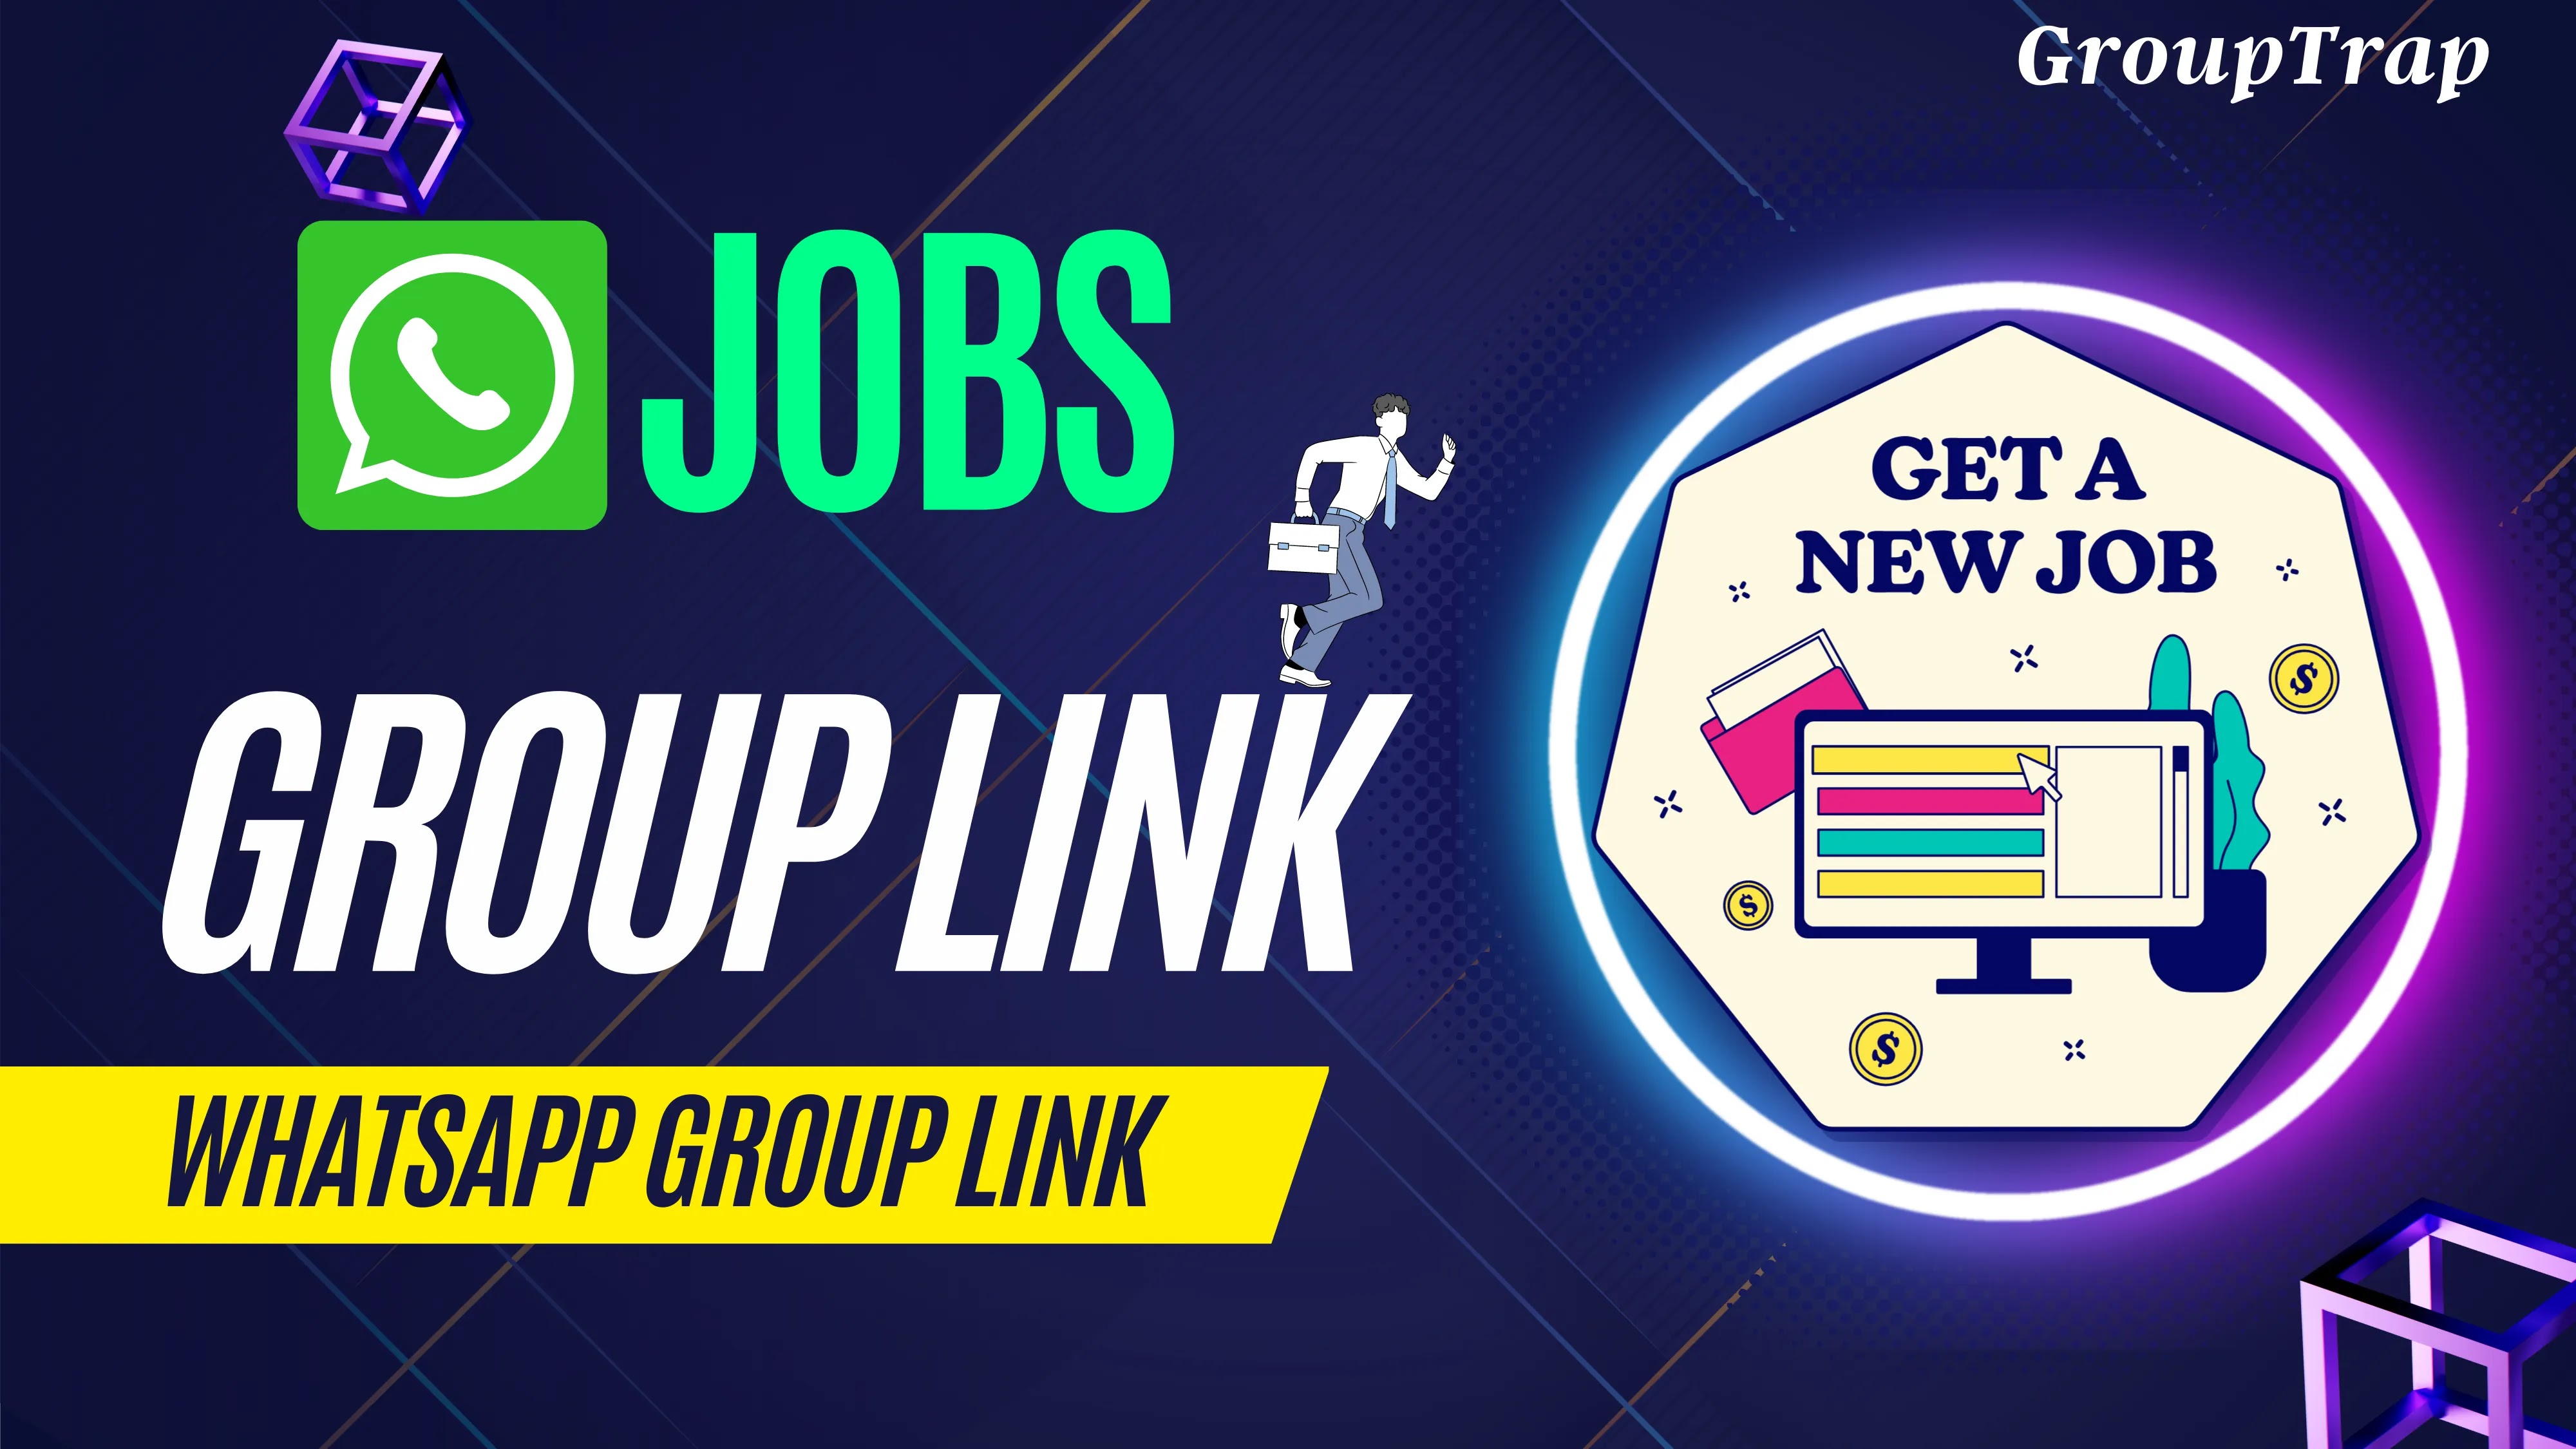 assignment writing jobs whatsapp group link